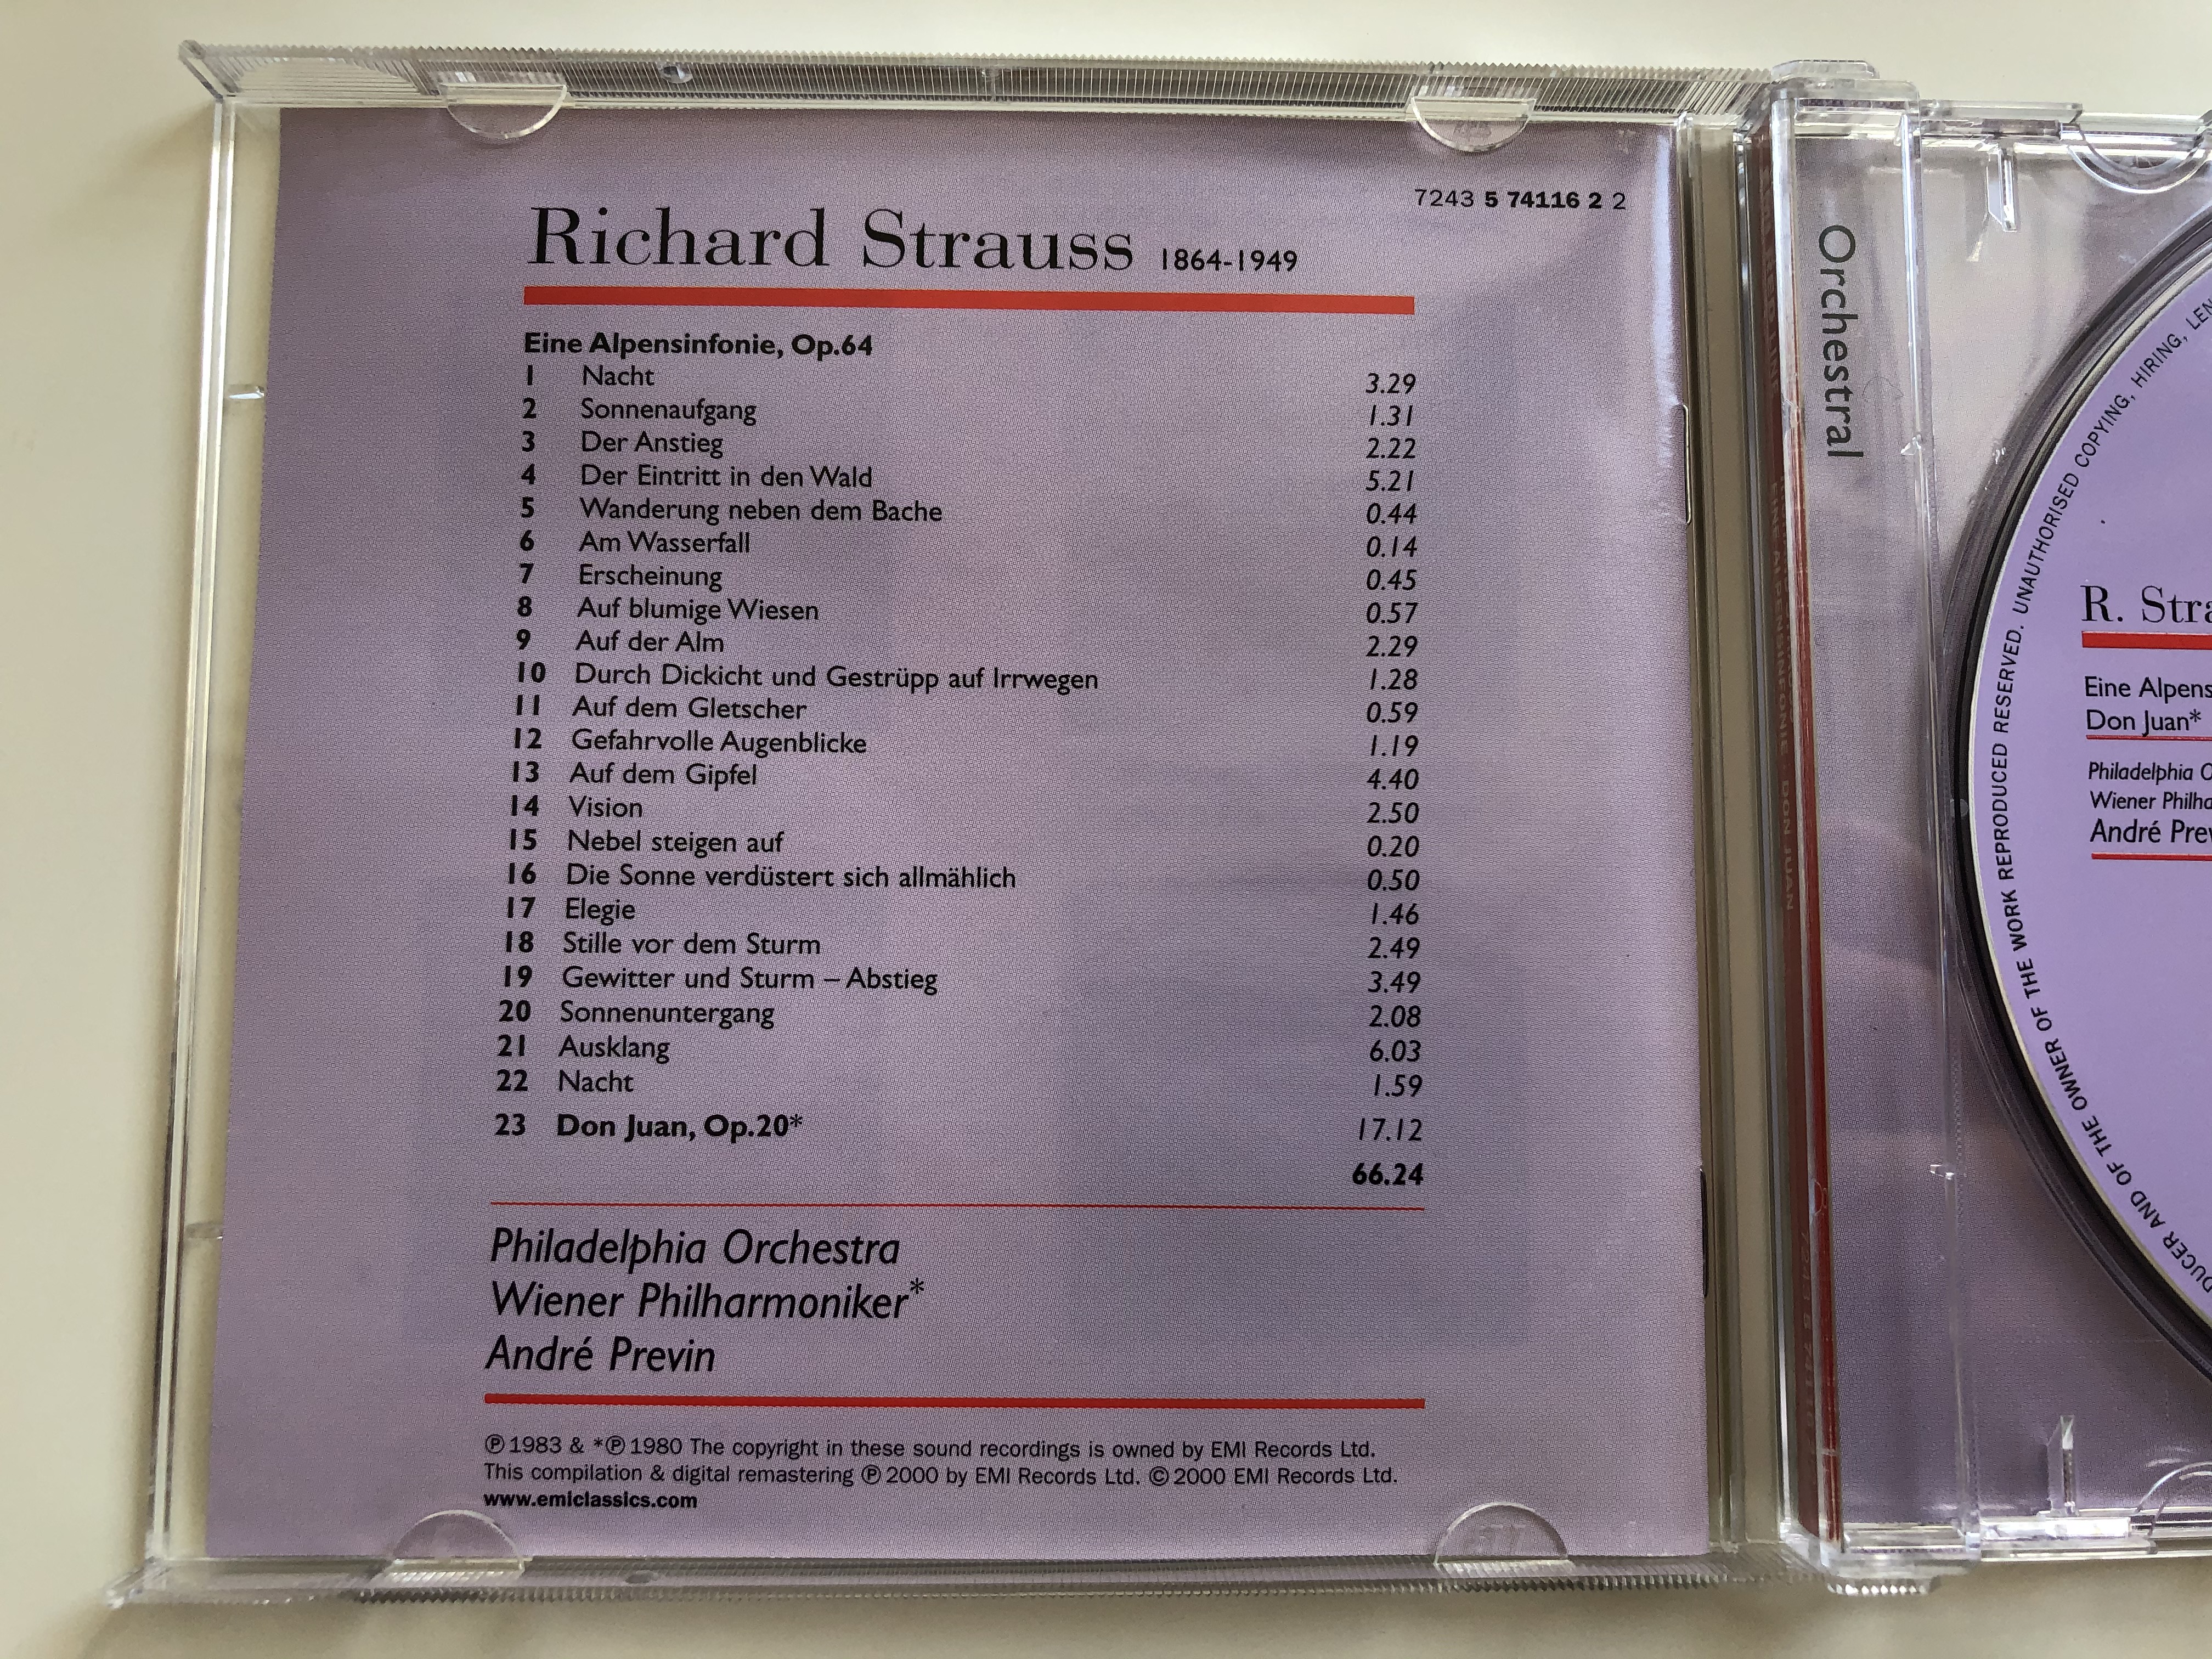 r.-strauss-eine-alpensinfonie-don-juan-philadelphia-orchestra-wiener-philharmoniker-andre-previn-emi-classics-audio-cd-2000-stereo-7243-5-74116-2-2-4-.jpg